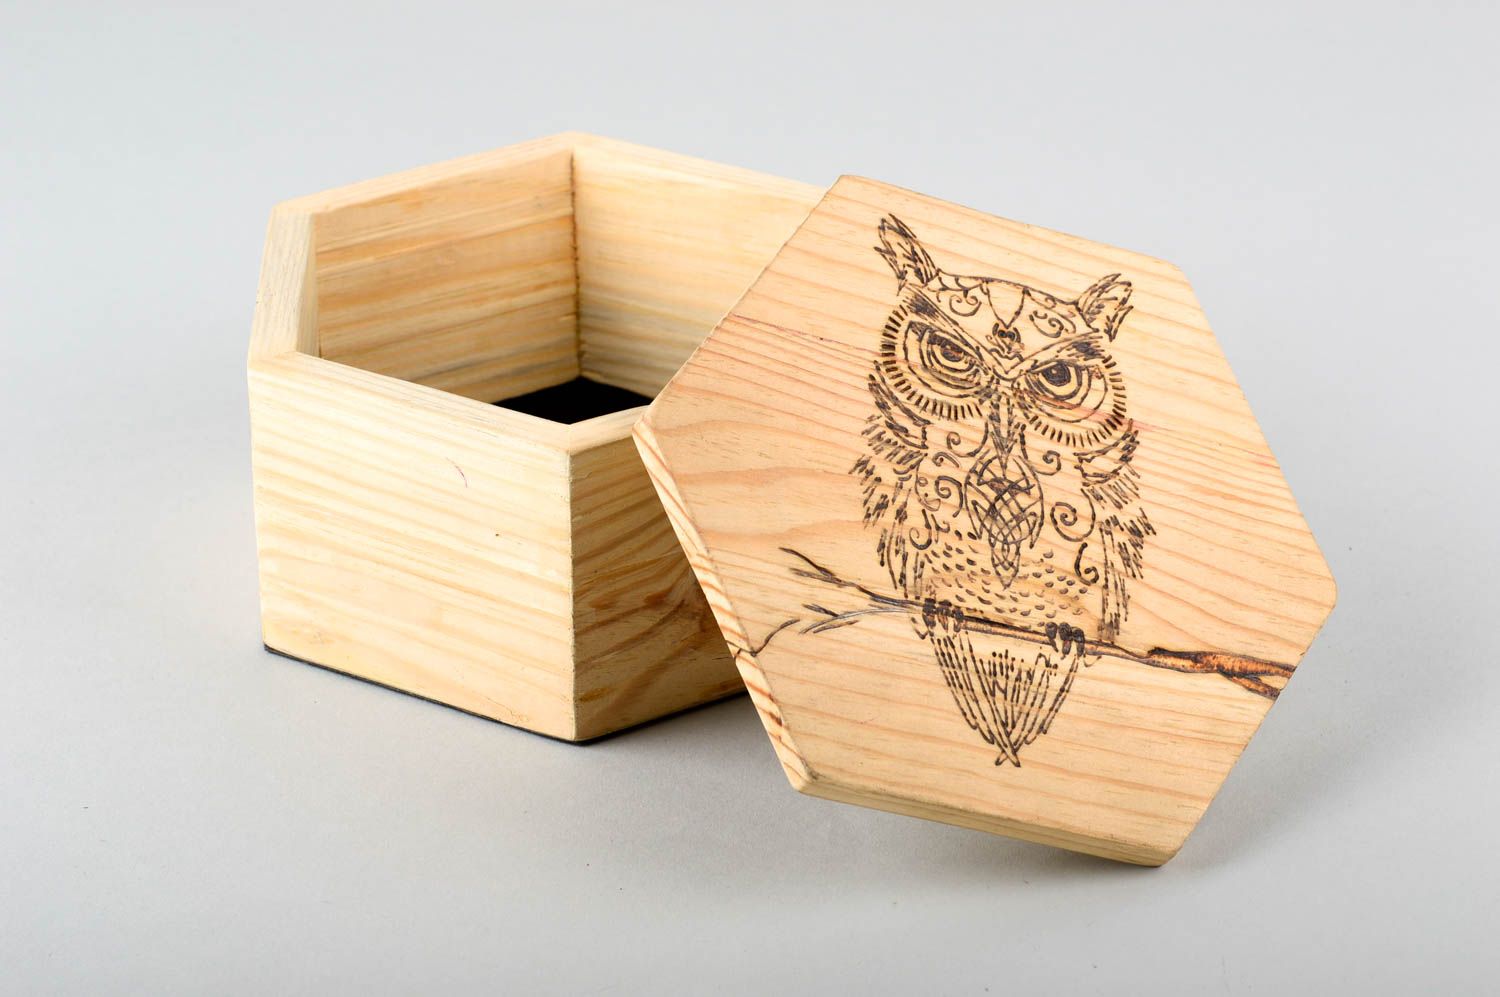 Handmade wooden box beautiful jewelry box home decoration ideas wood craft photo 1